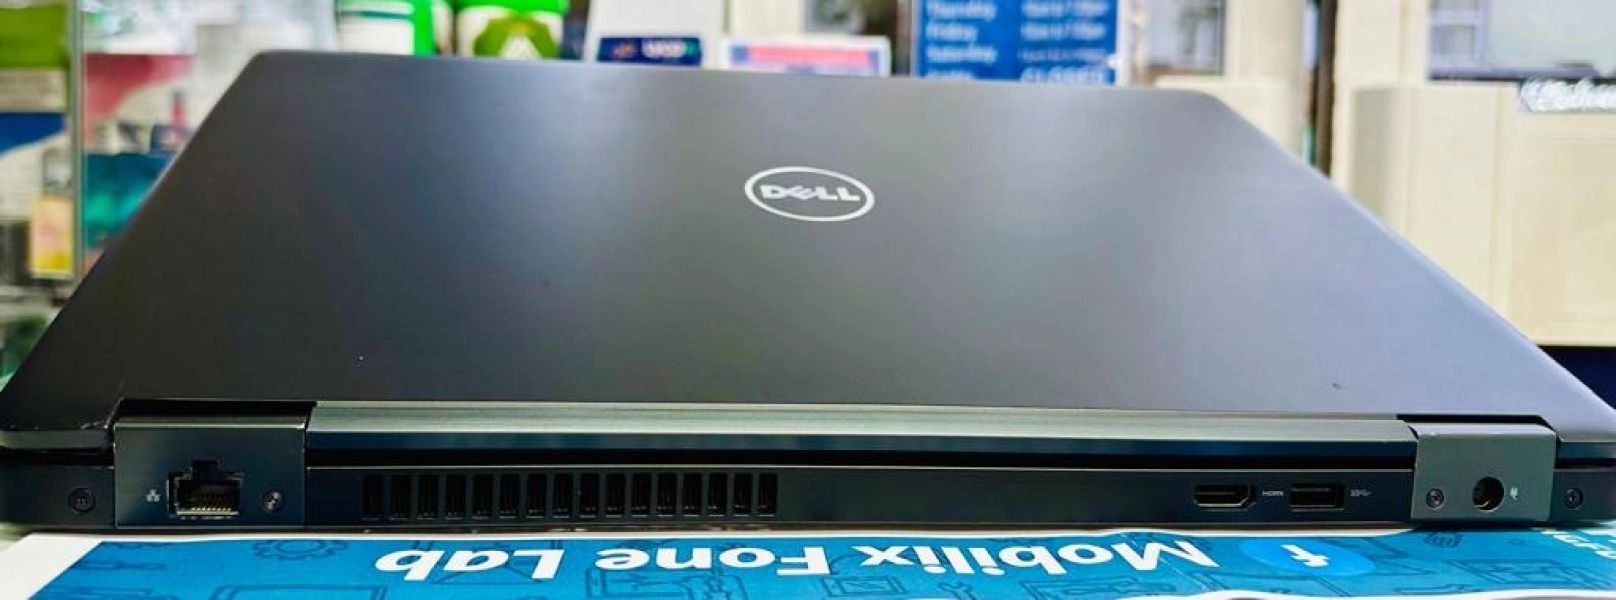 Dell Latitude 5580 15.6” Laptop intel Core i5 7th Gen 8GB RAM 256GB SSD Windows 10 Good Condition